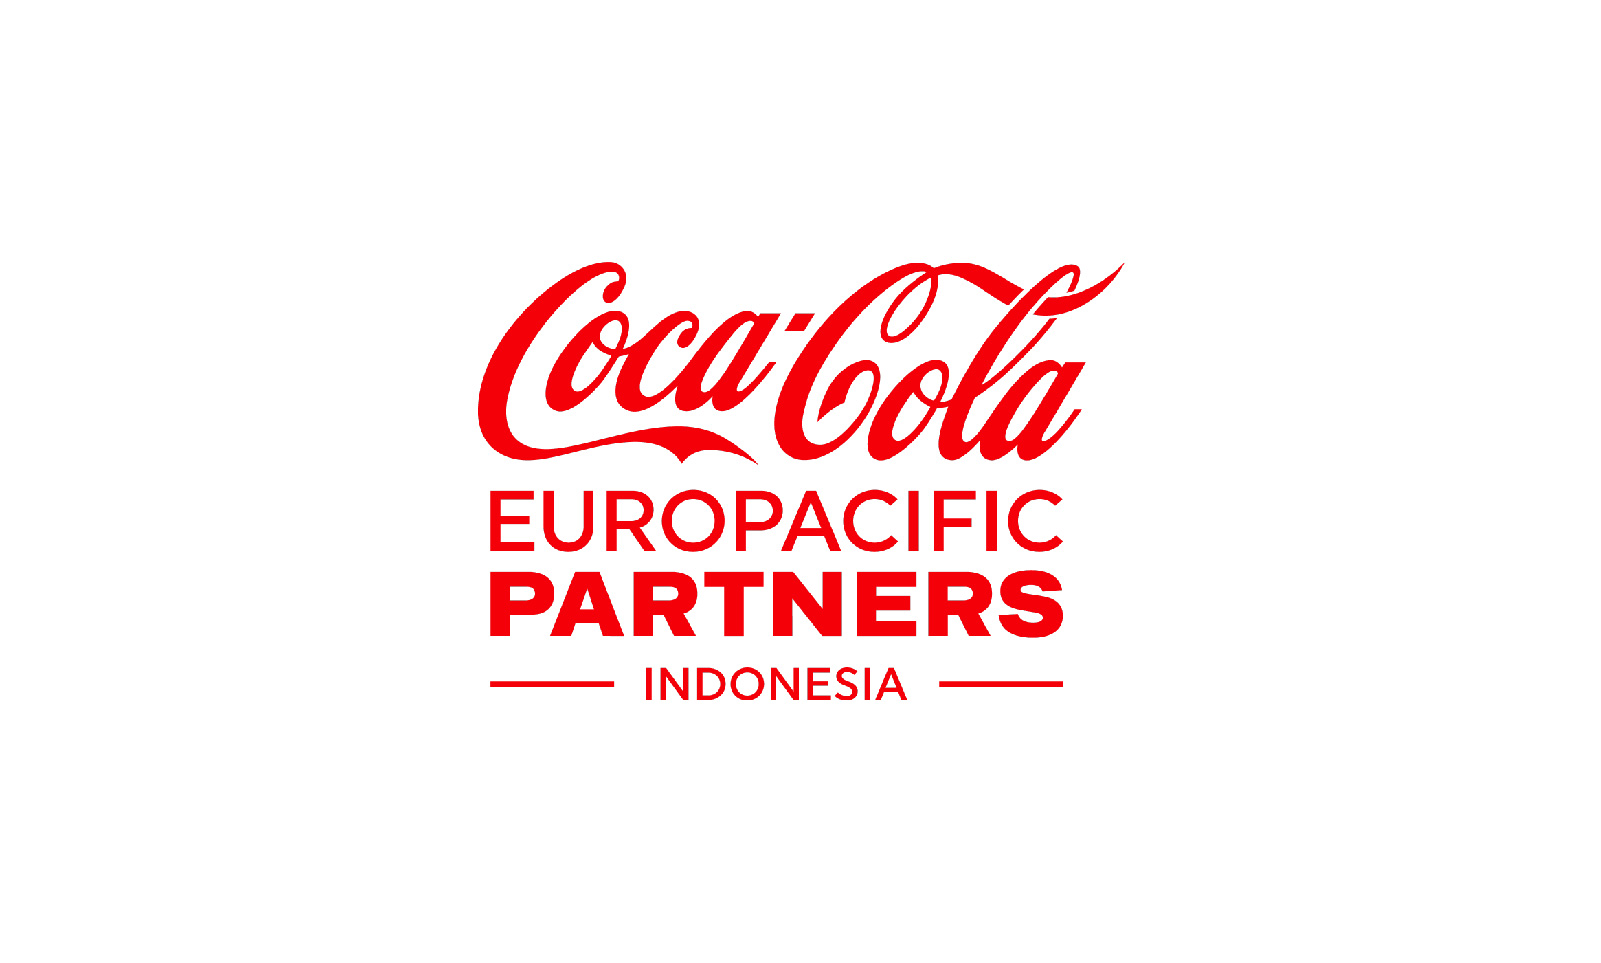 Coca Cola Europacific Partners Indonesia 02